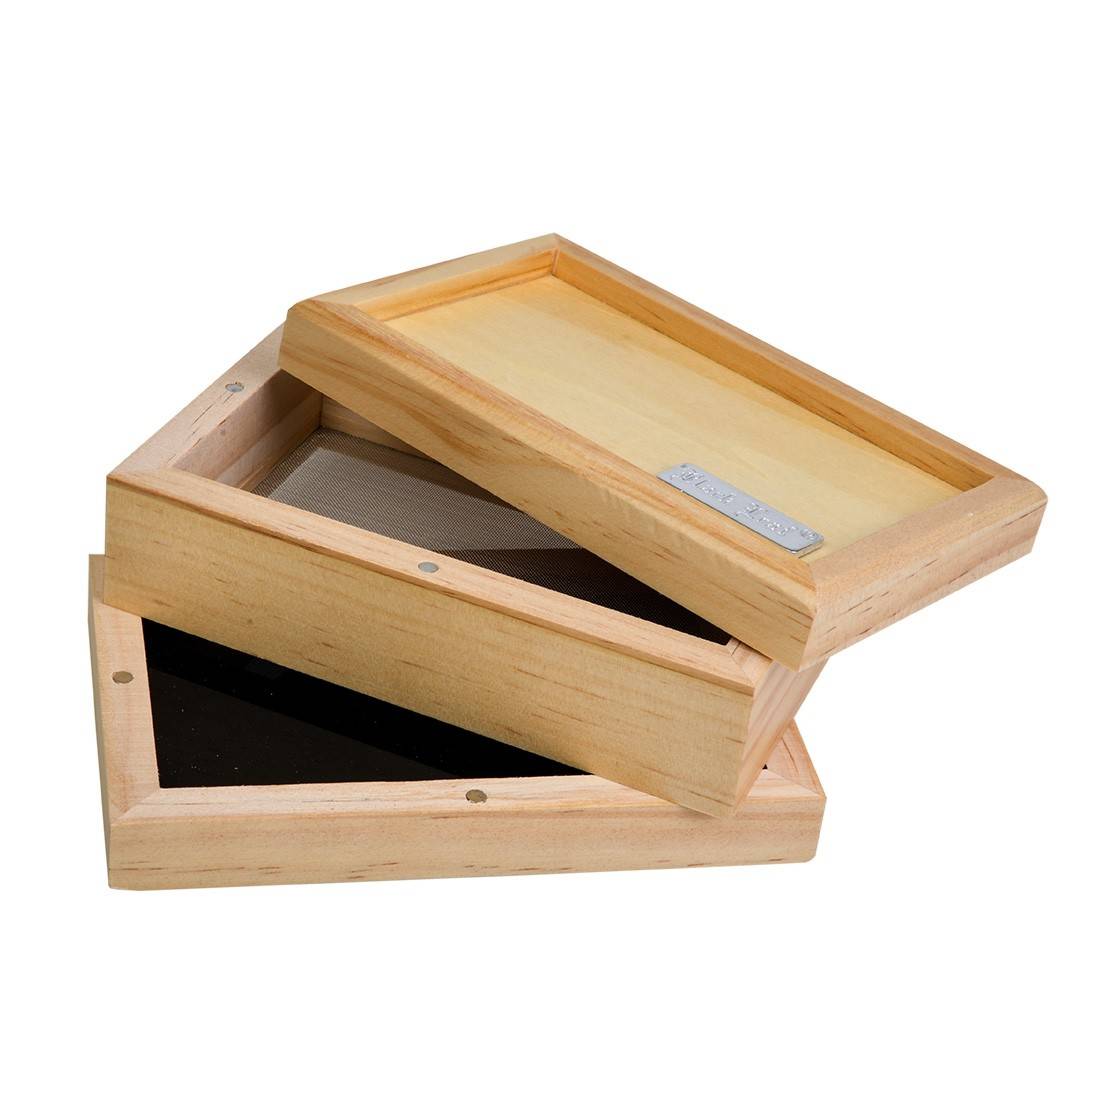 Petite boite en bois avec tamis -OObox